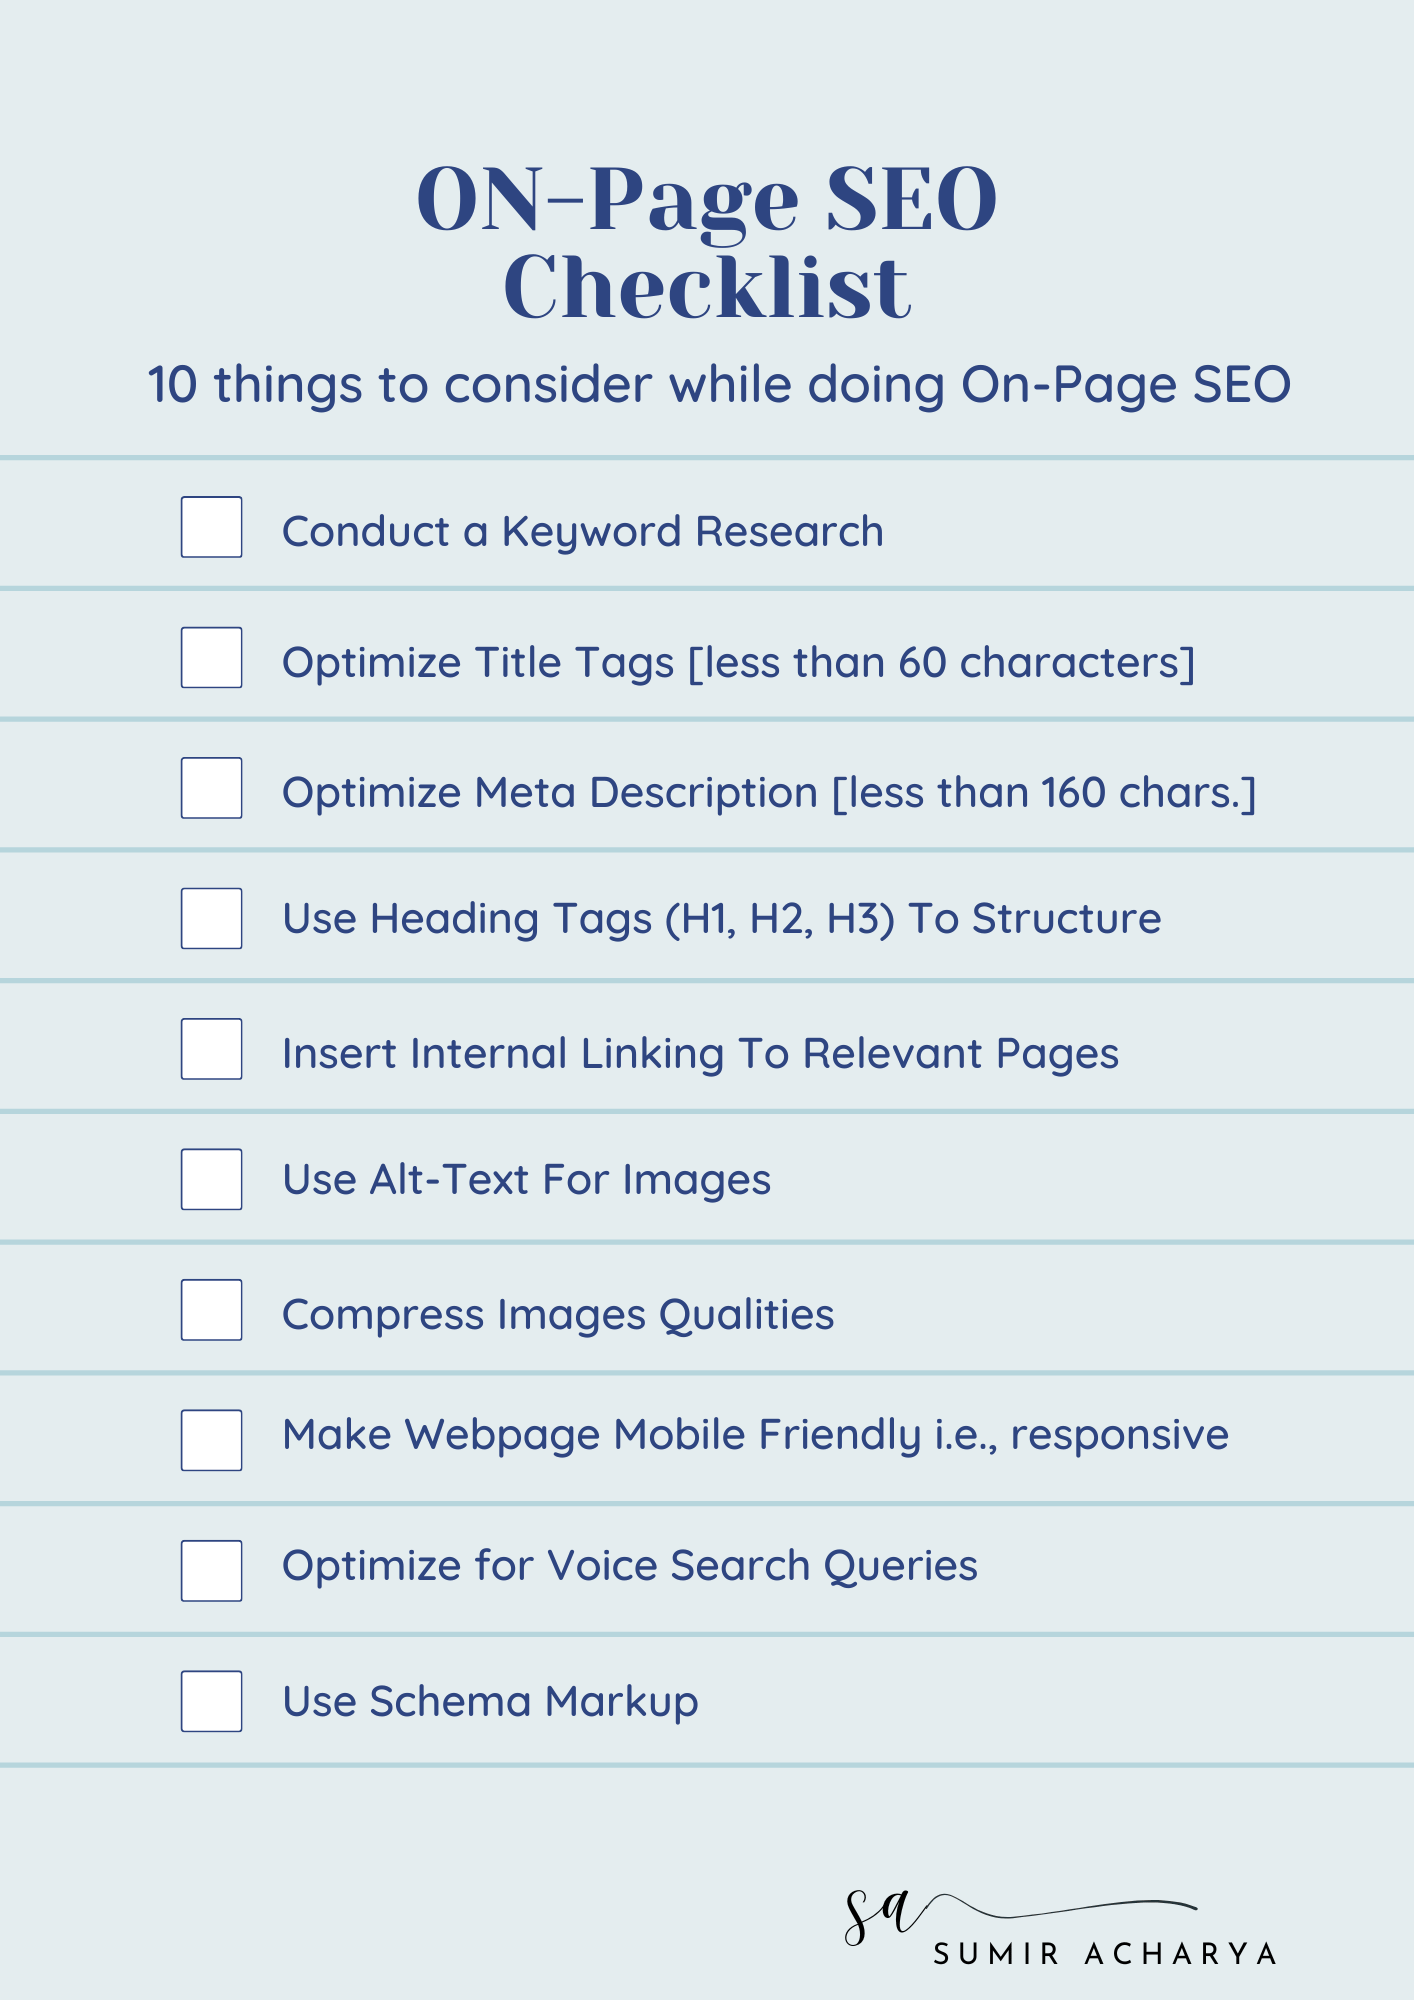 On Page SEO Checklist